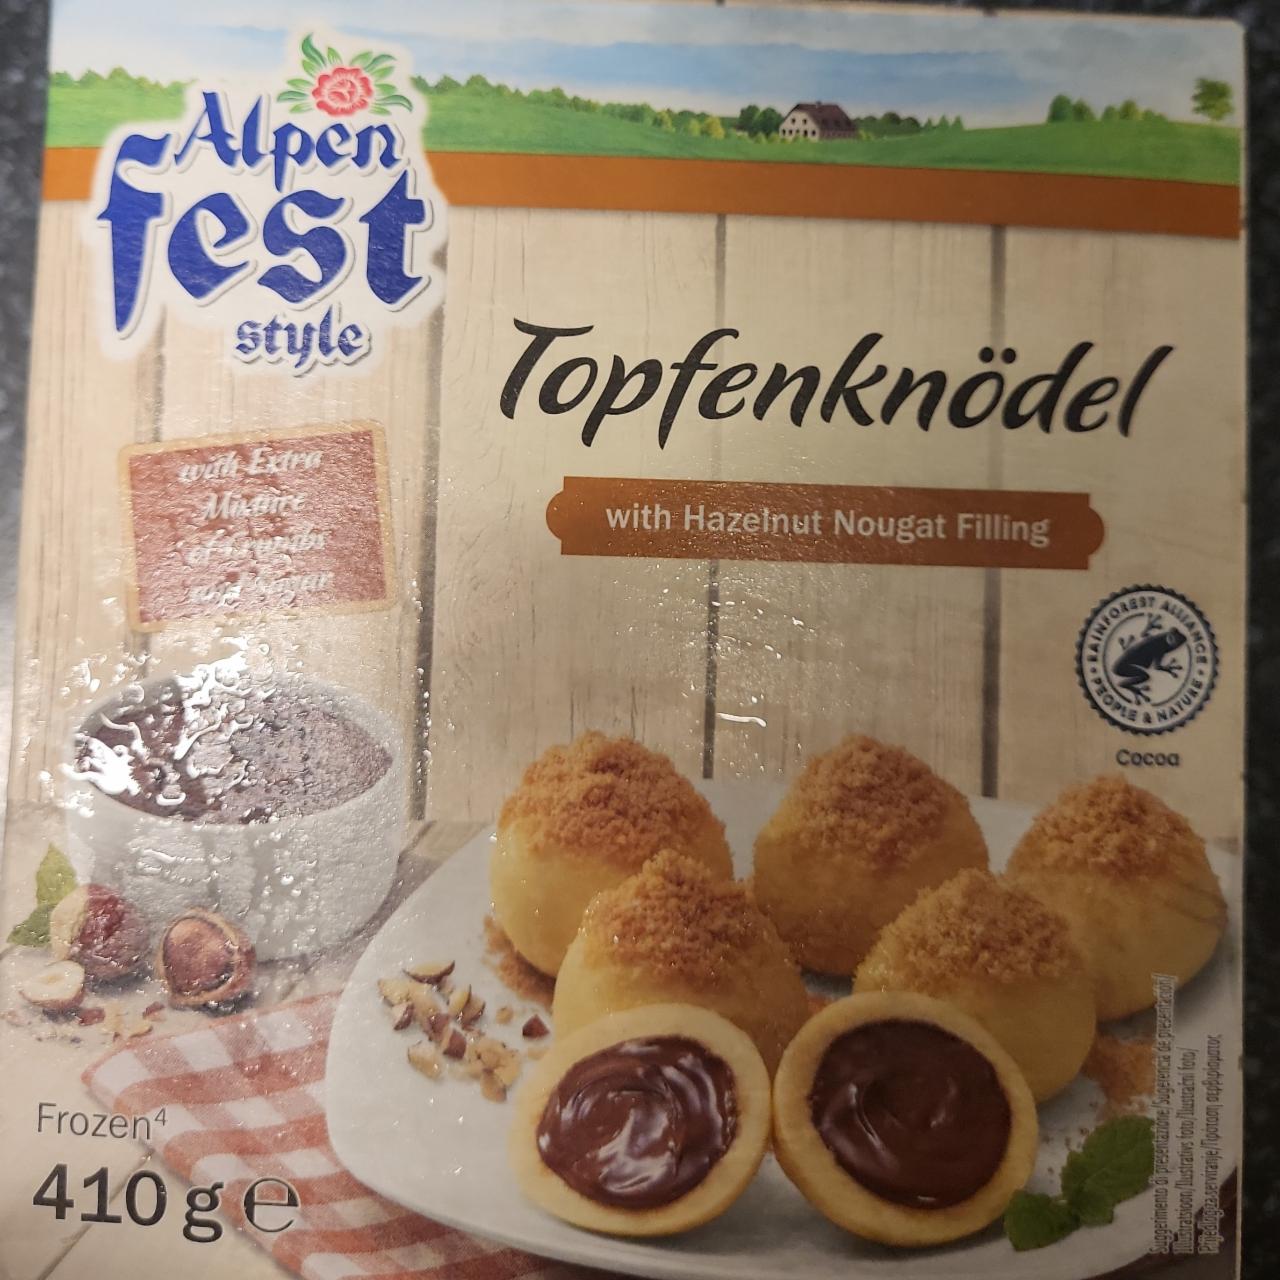 Fotografie - Topfenknödel with Hazelnut Nougat Filling Alpen fest style